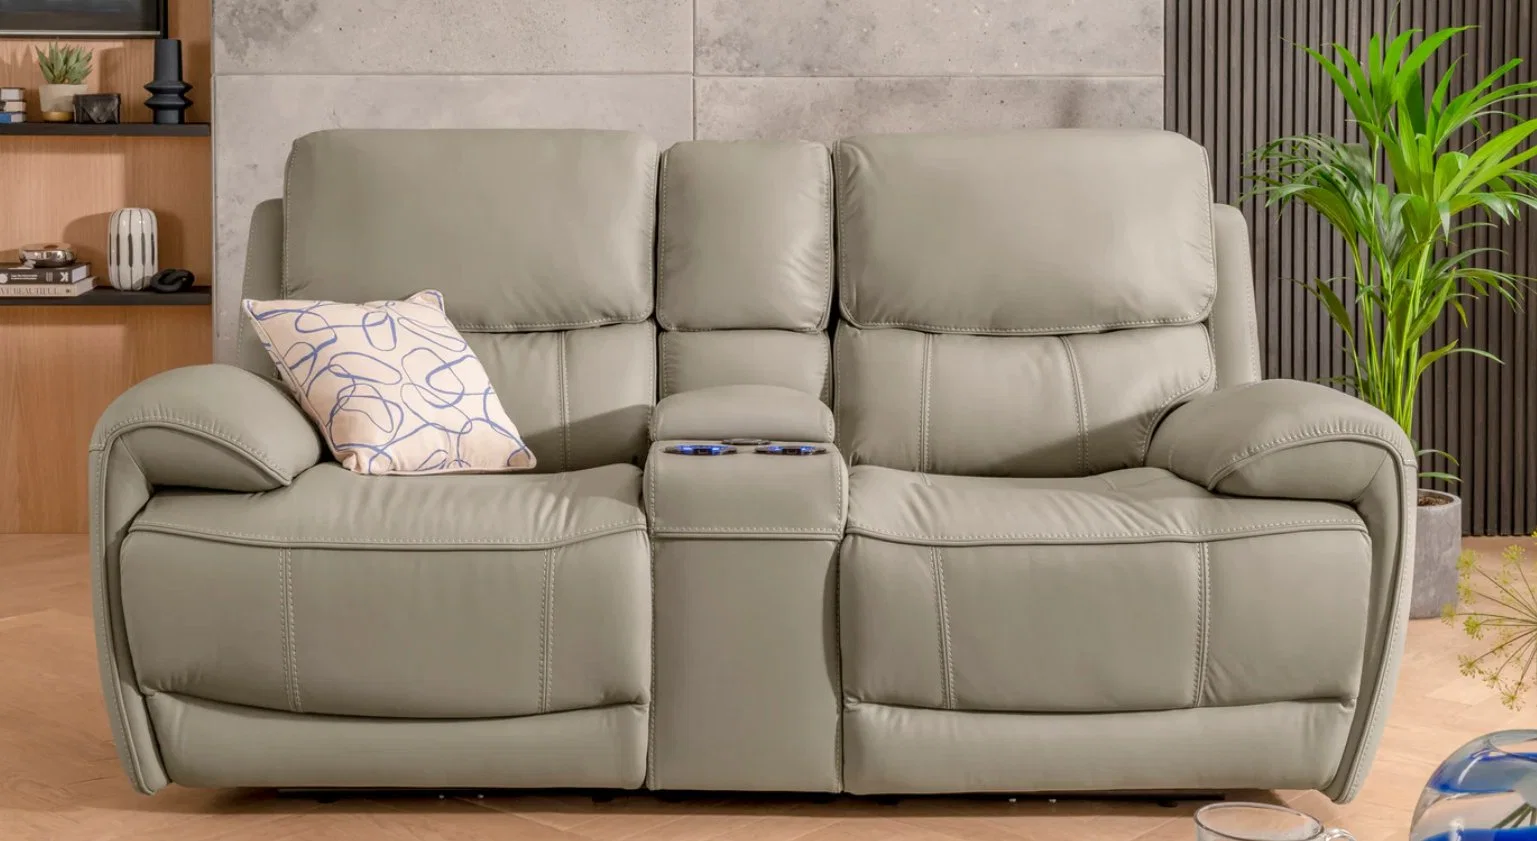 Geeksofa Modern Design 2-Seater Leather Power Recliner Living Room Sofa